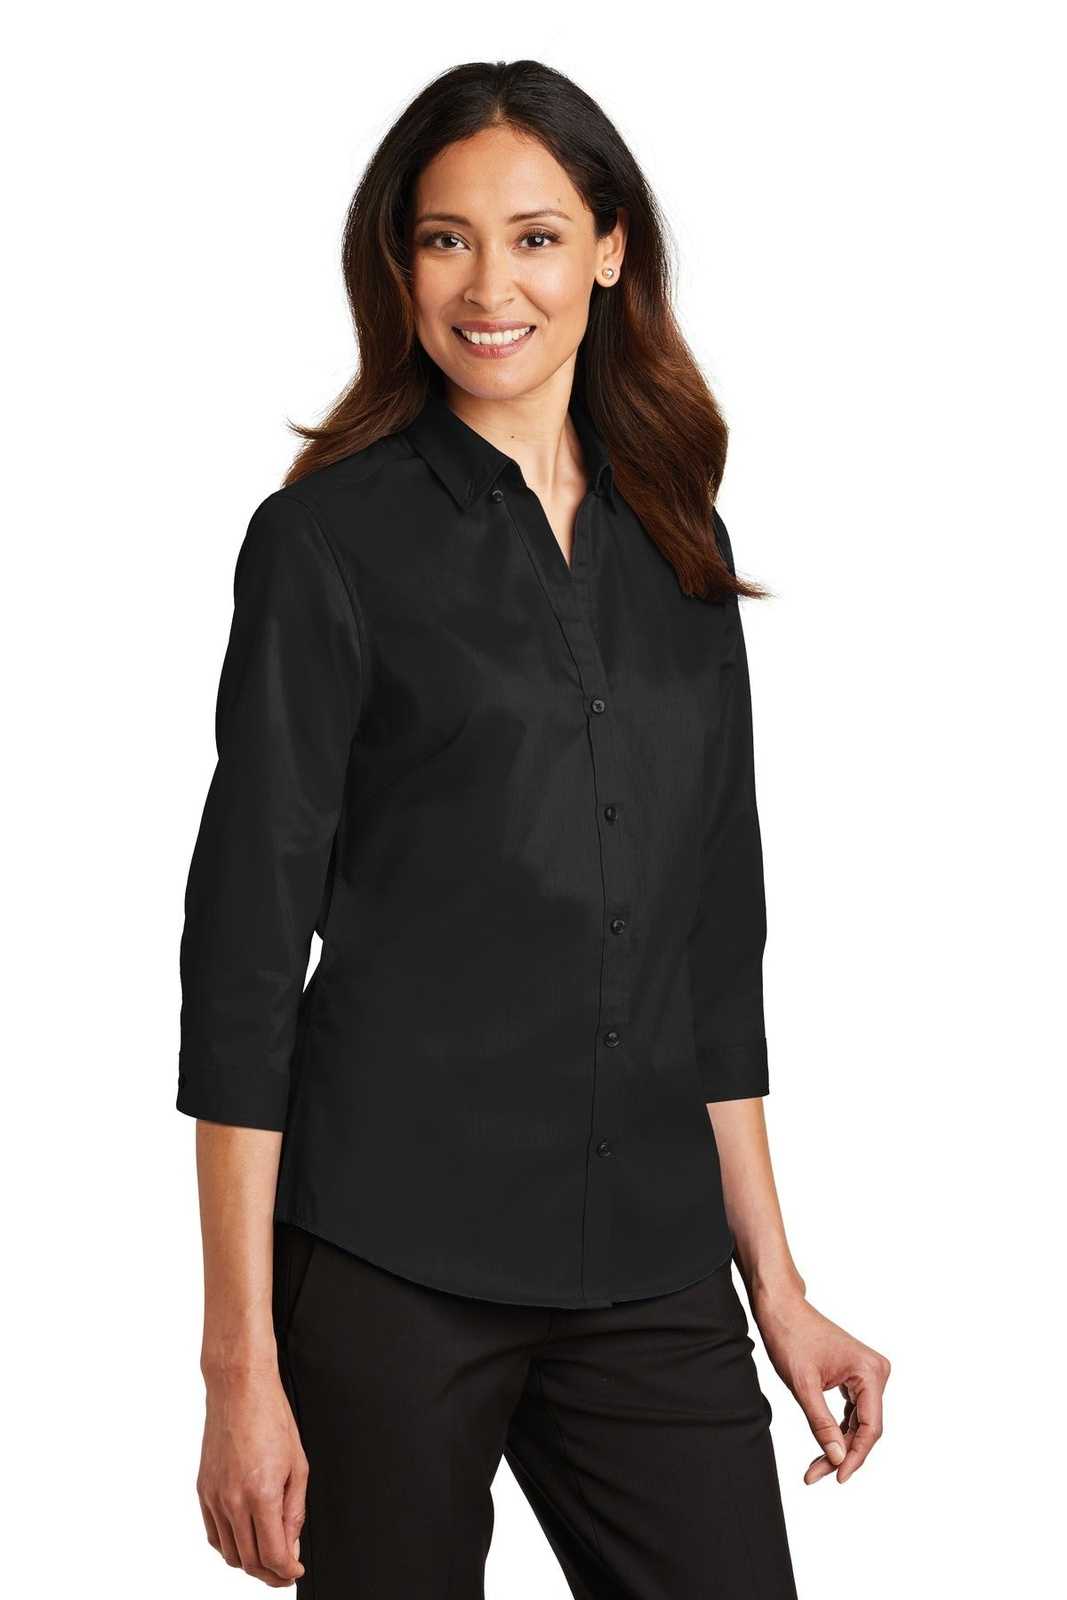 Port Authority L665 Ladies 3/4-Sleeve Superpro Twill Shirt - Black - HIT a Double - 4